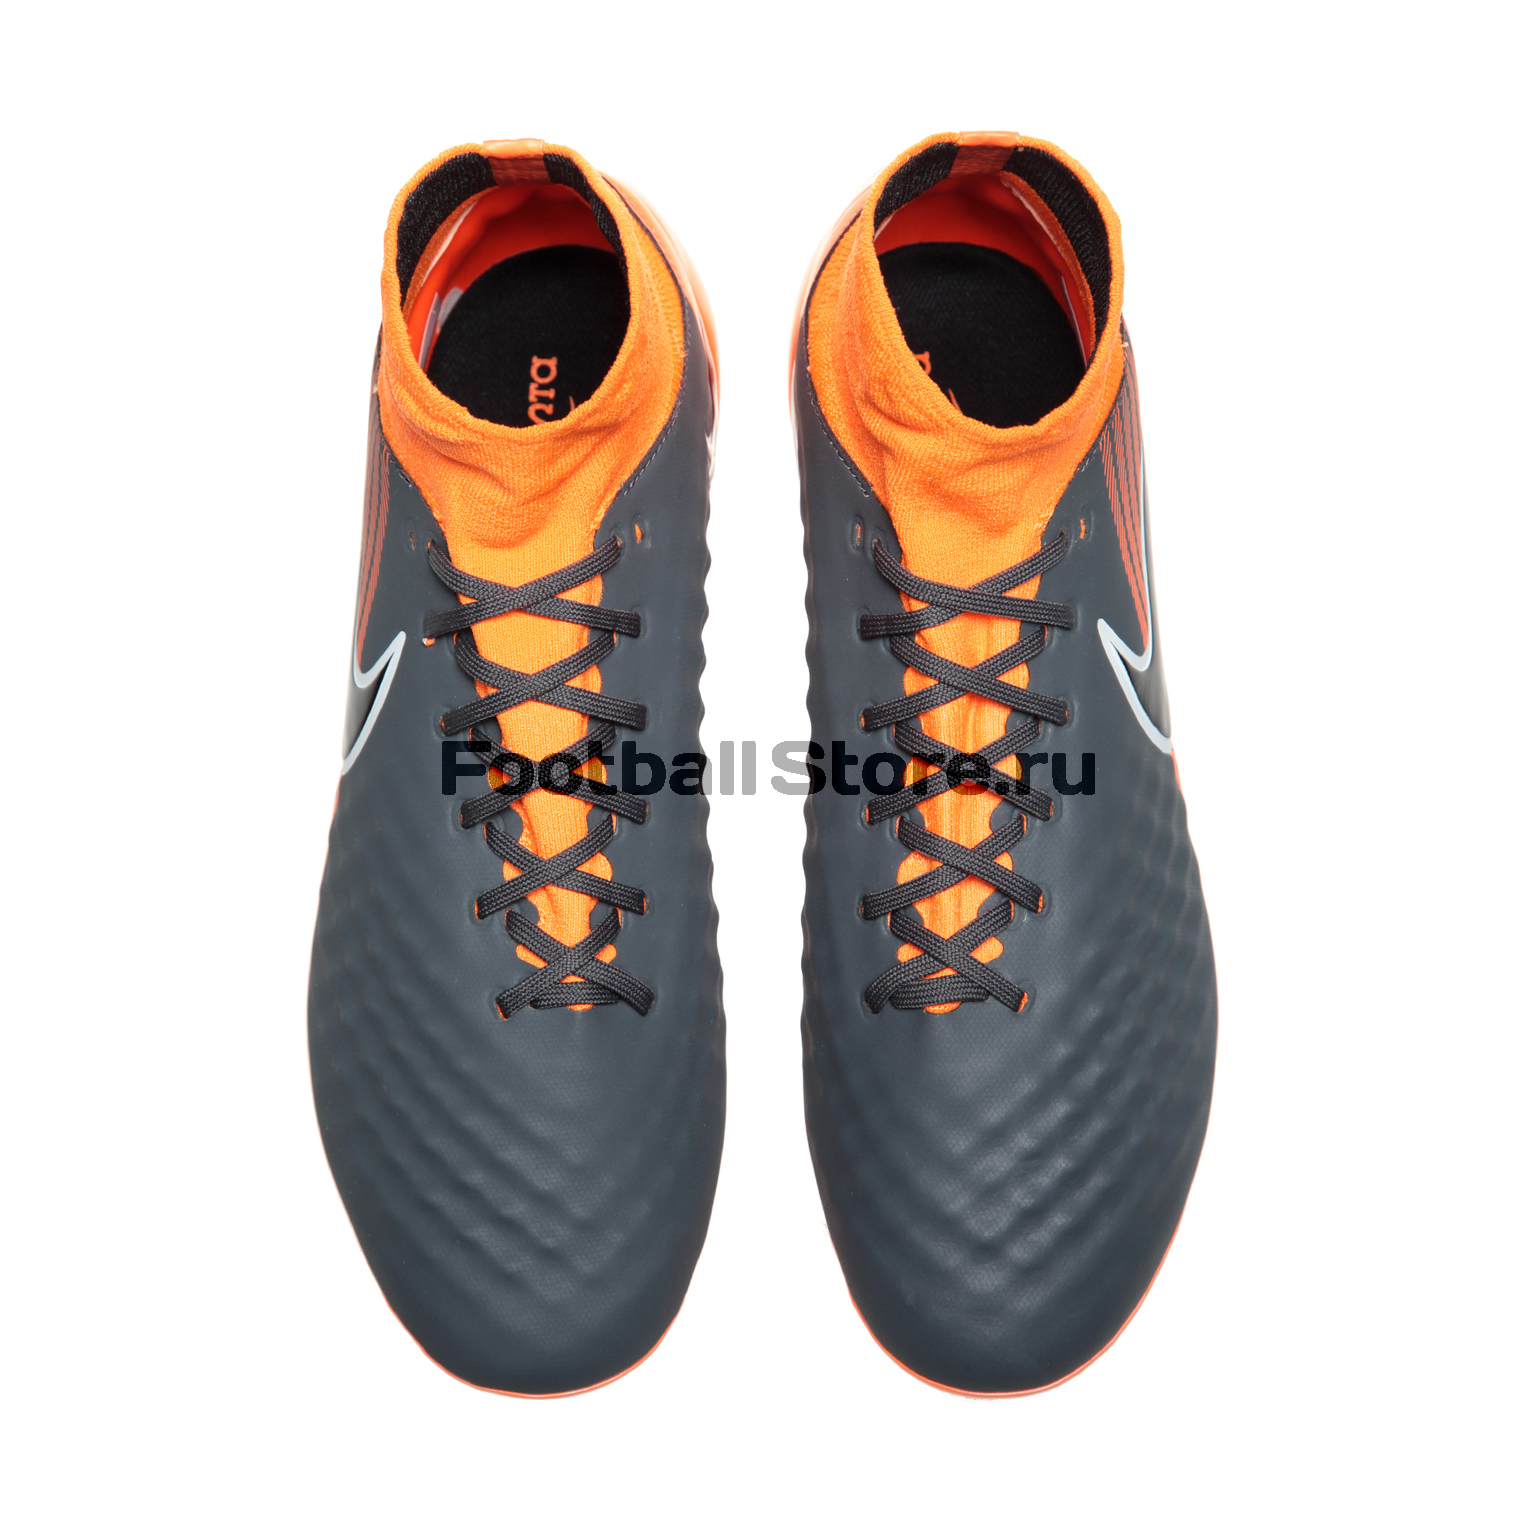 Бутсы Nike Obra 2 Pro DF FG AH7308-080